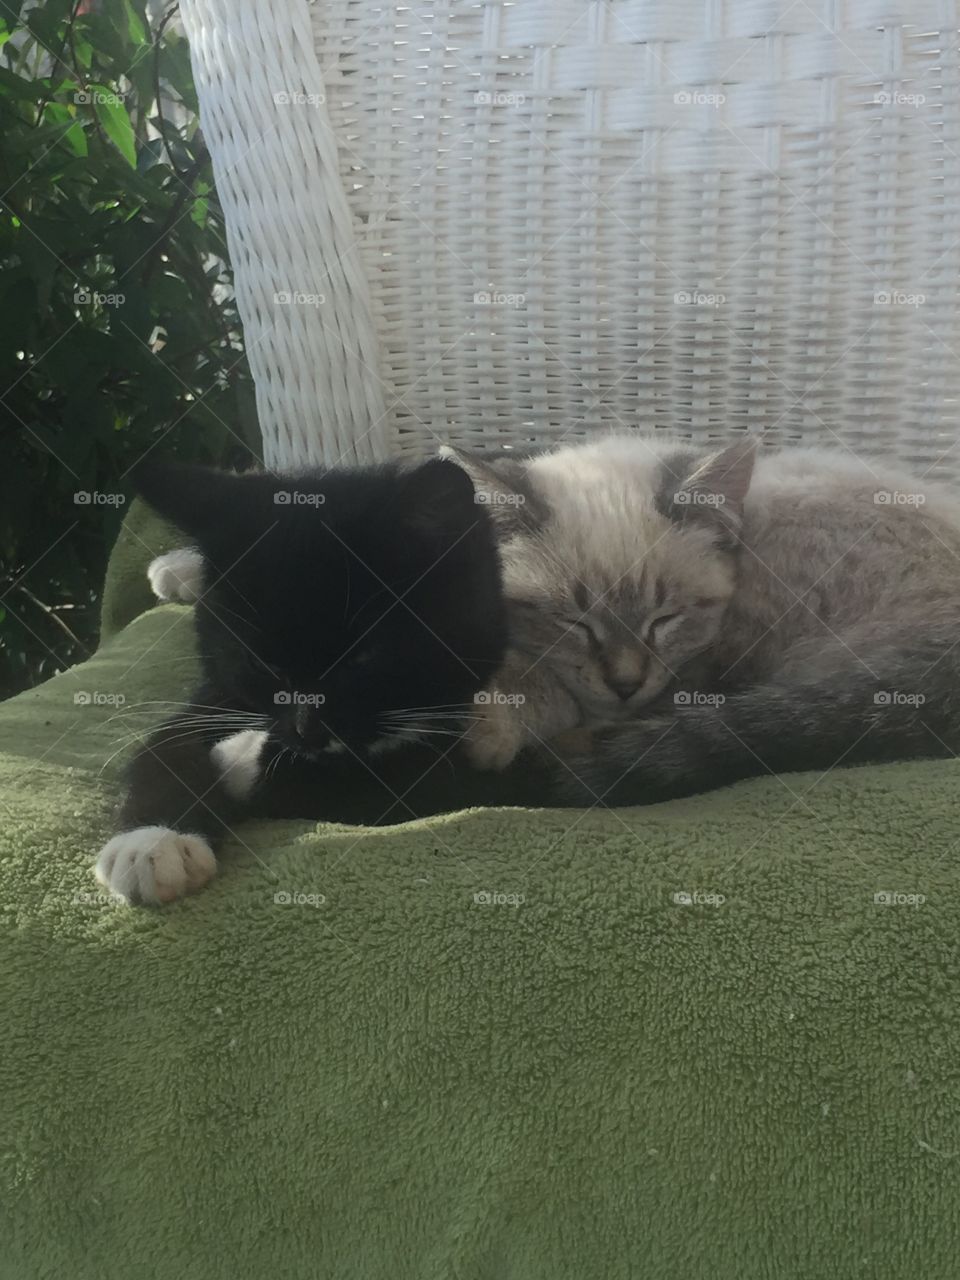 Two kittens: Salem and Jinx